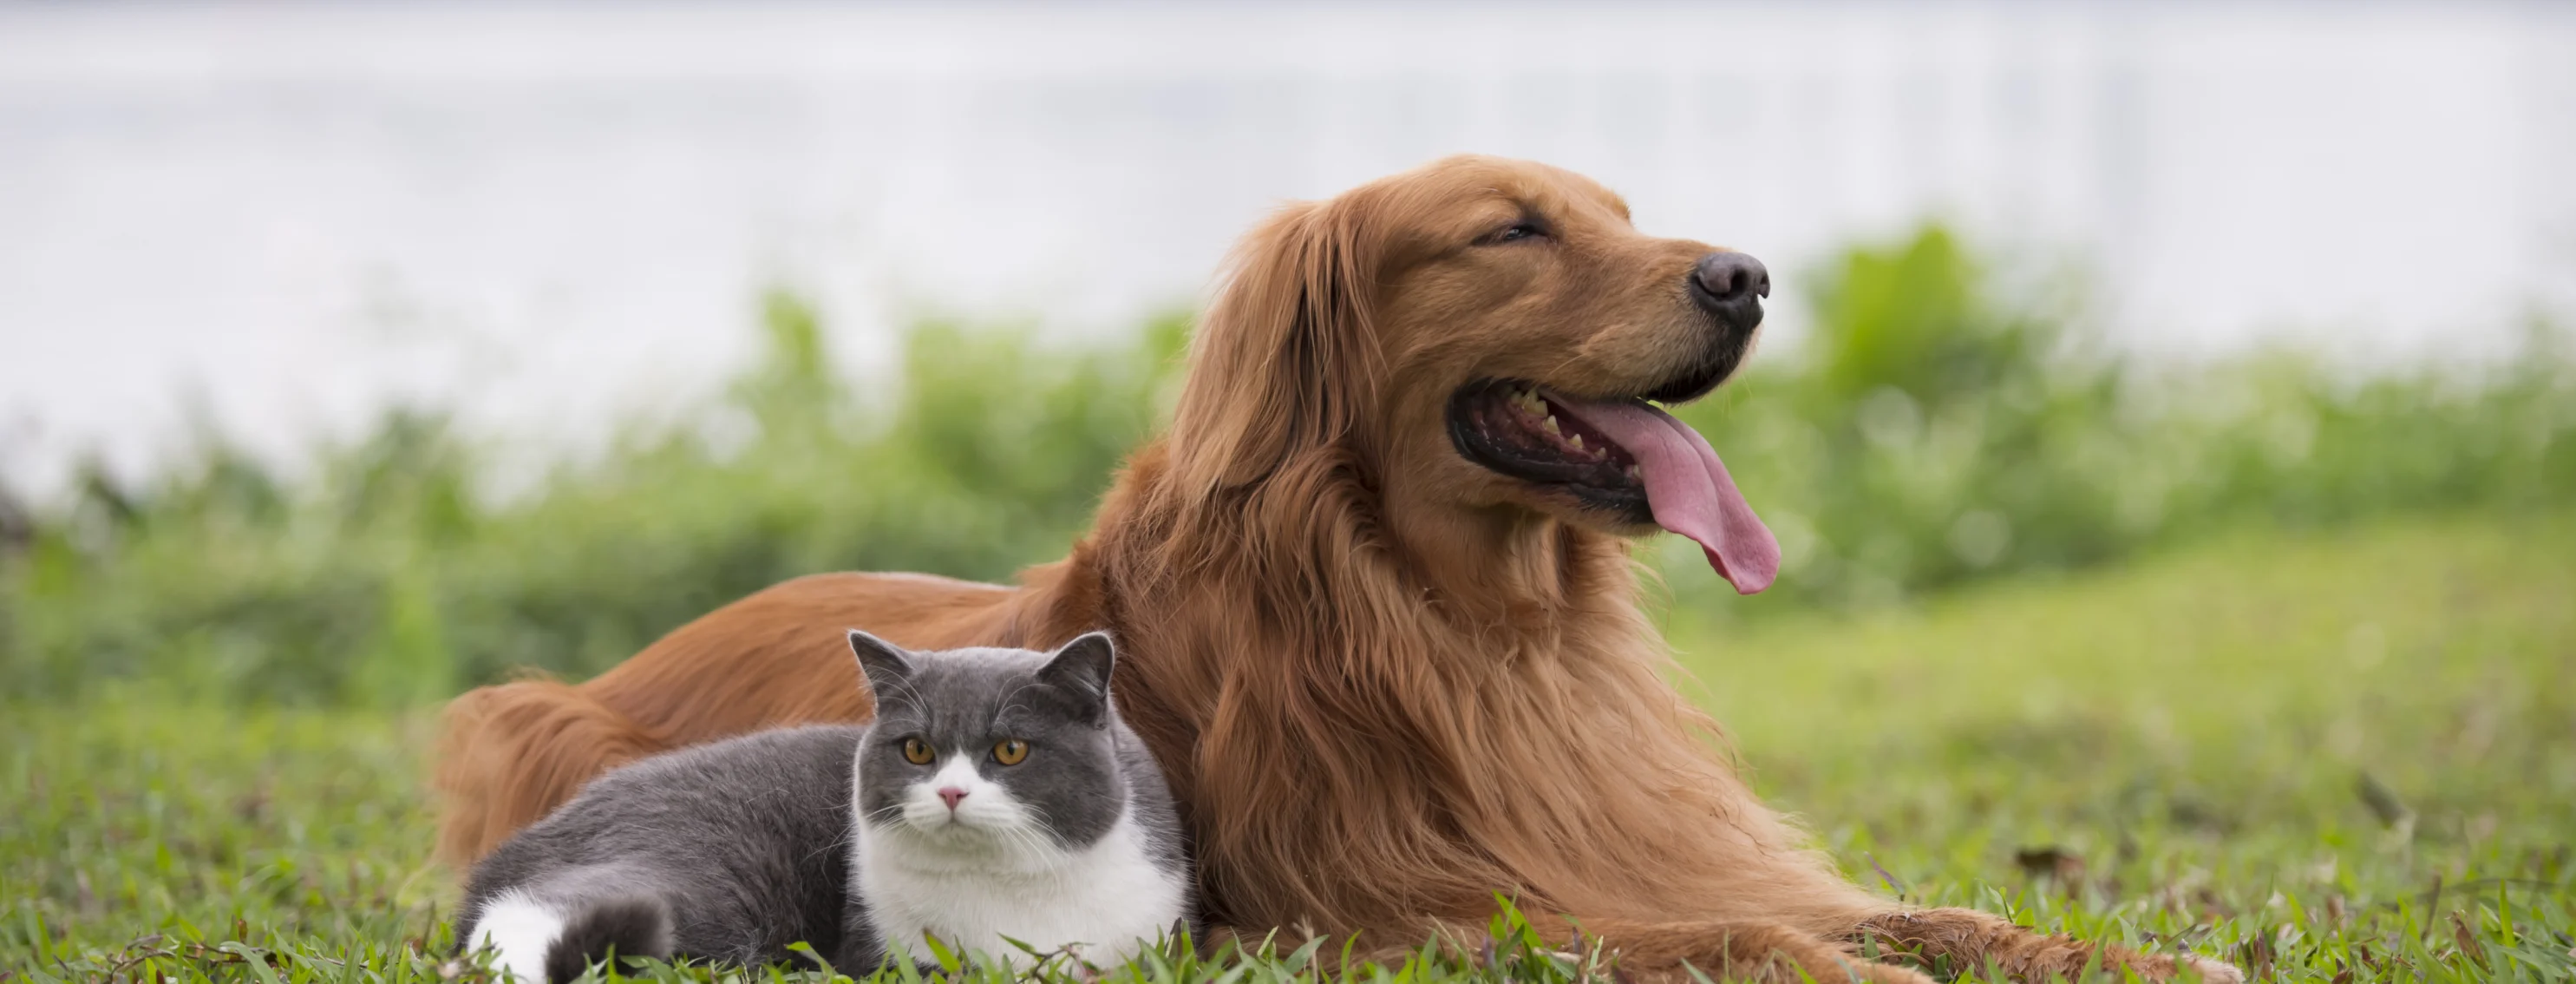 Dog and Cat laying on grass near bridge